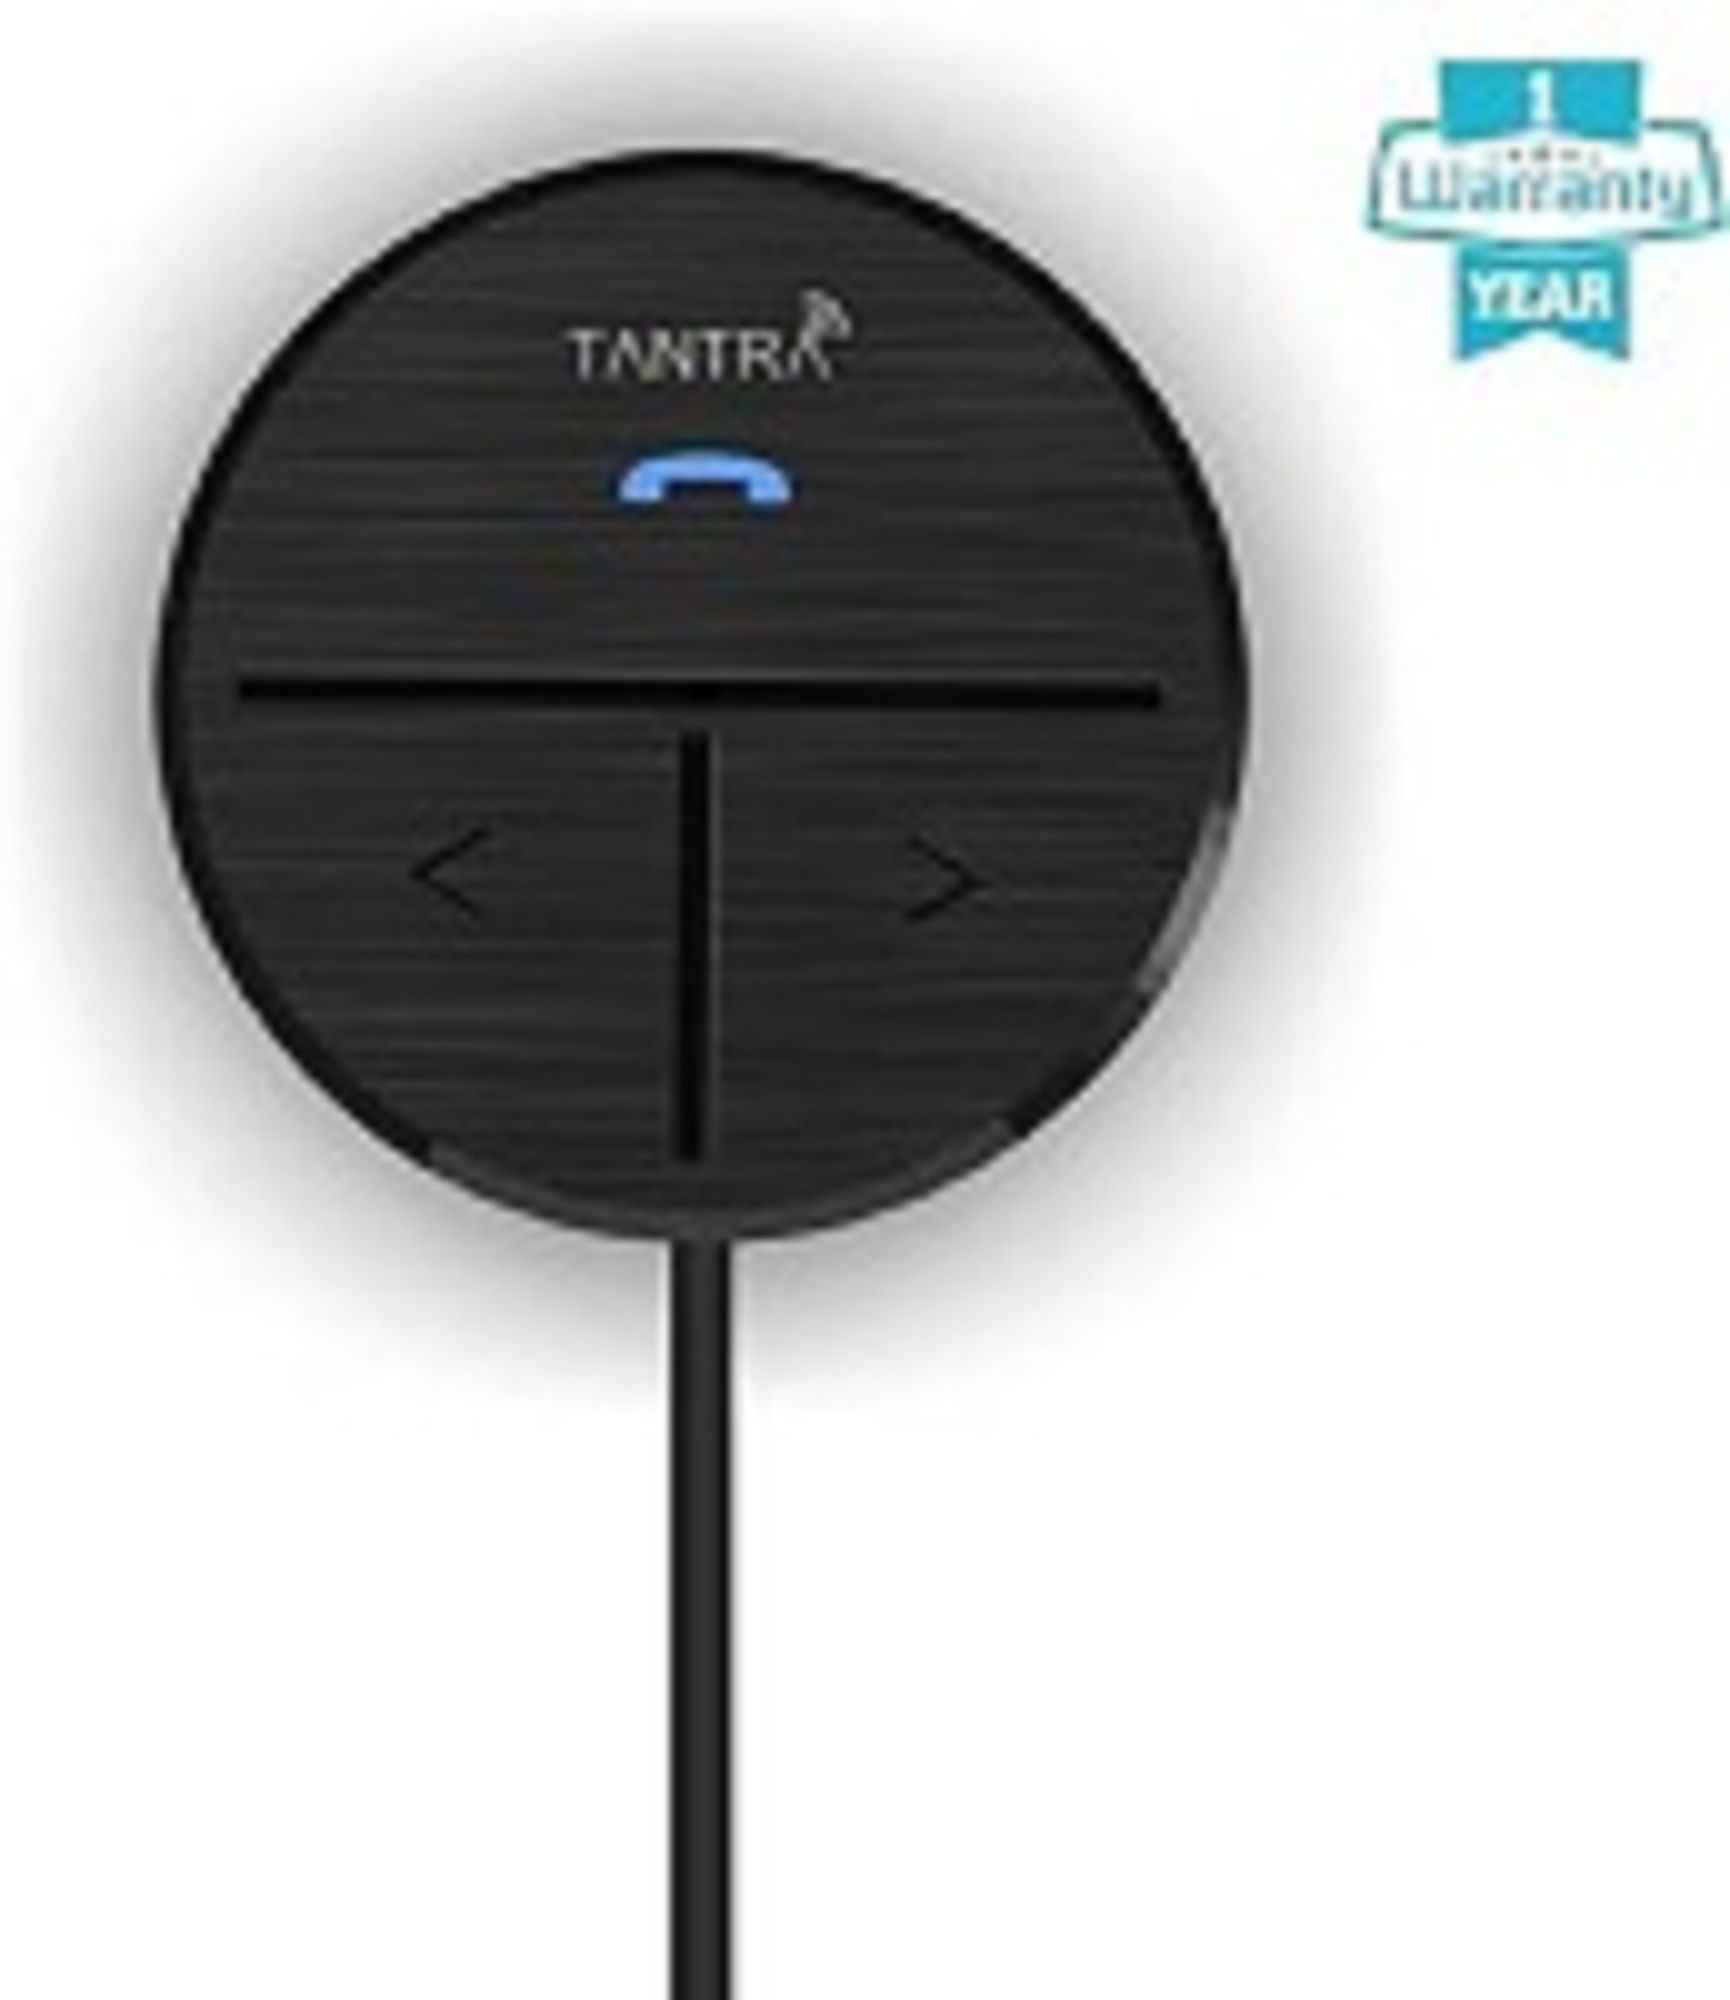     			Tantra Black Bluetooth Device